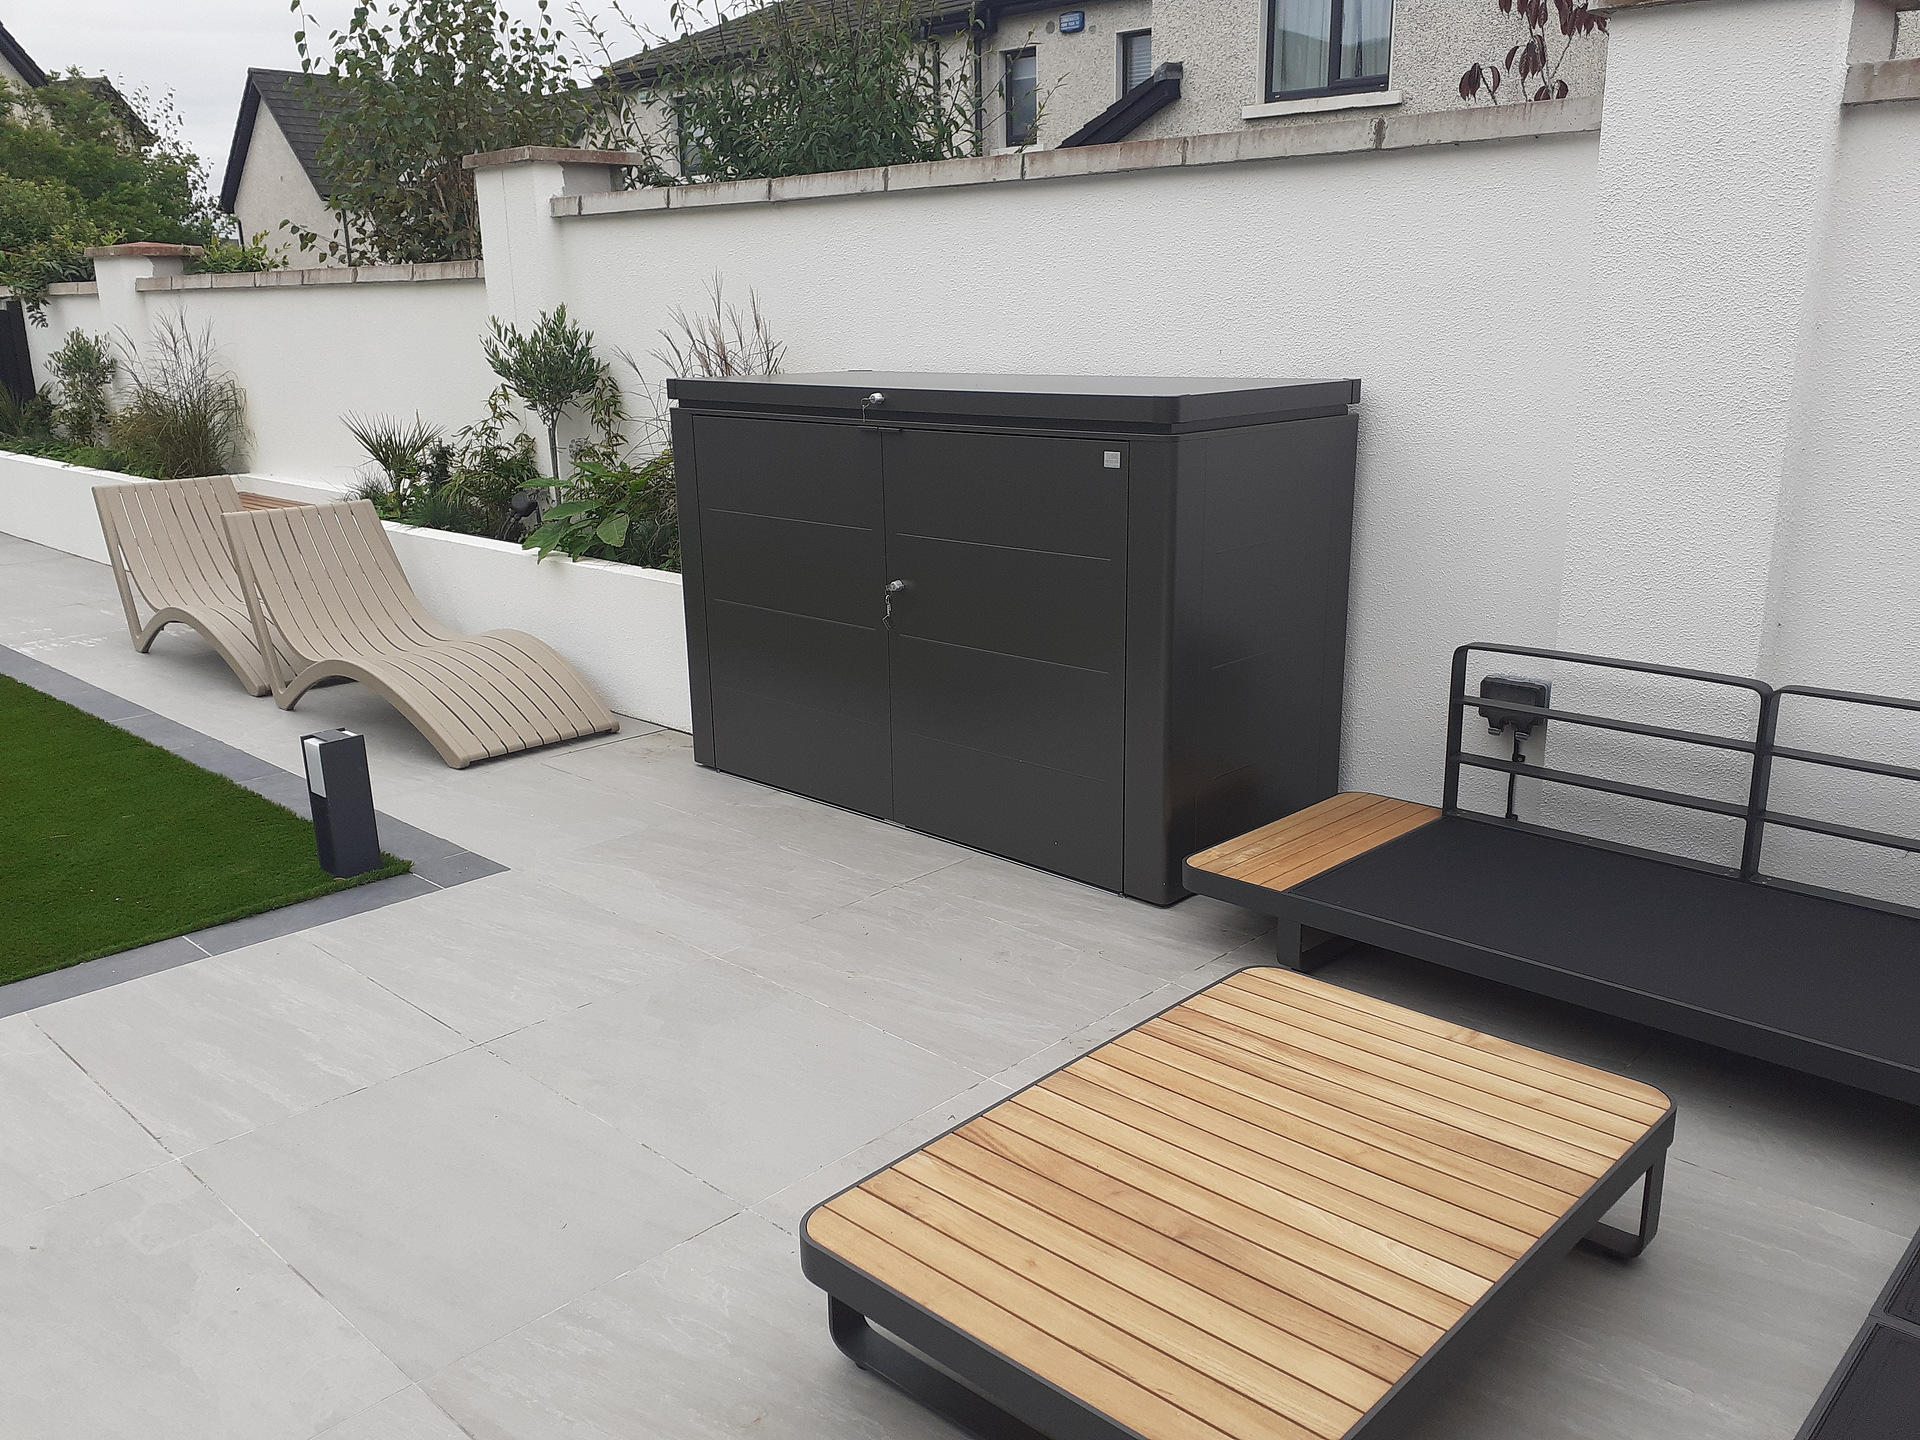 Exceptionally stylish & maintenance free, the  Biohort HighBoard 200 Garden Patio Storage Unit in metallic dark grey |  Supplied + Fitted in Wexford by Owen Chubb Garden Landscapers